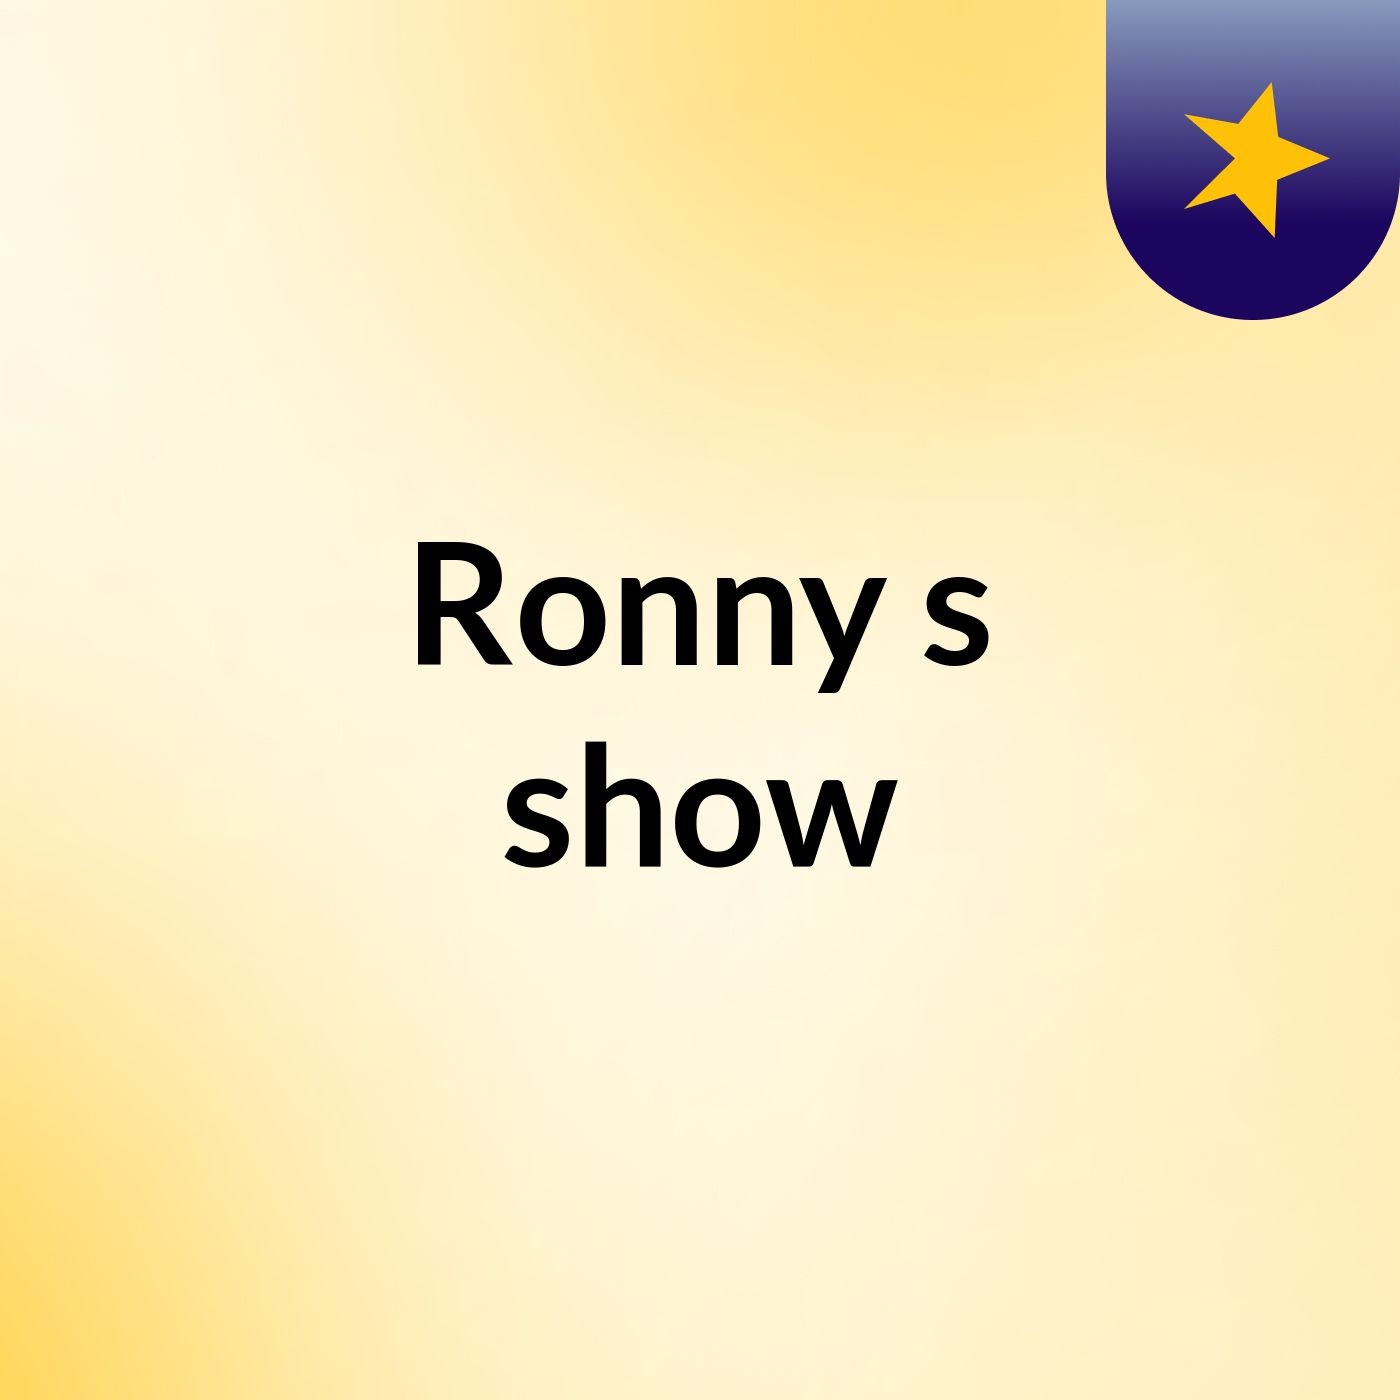 Ronny's show